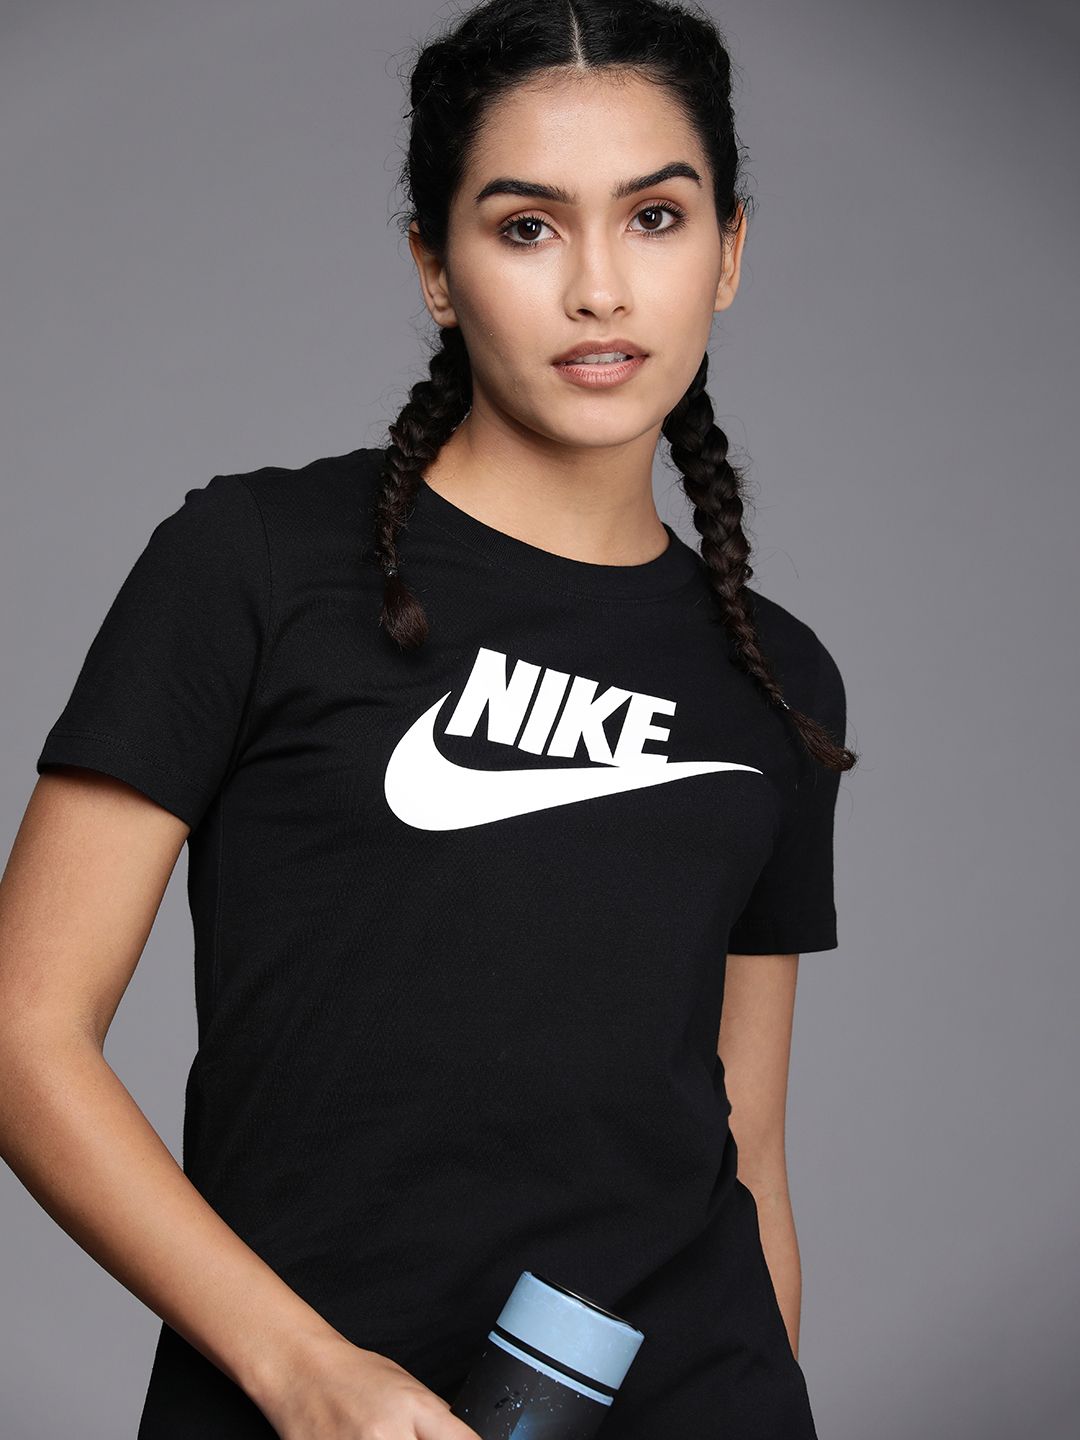 Nike Women Black & White Brand Logo Printed Pure Cotton  Top Price in India